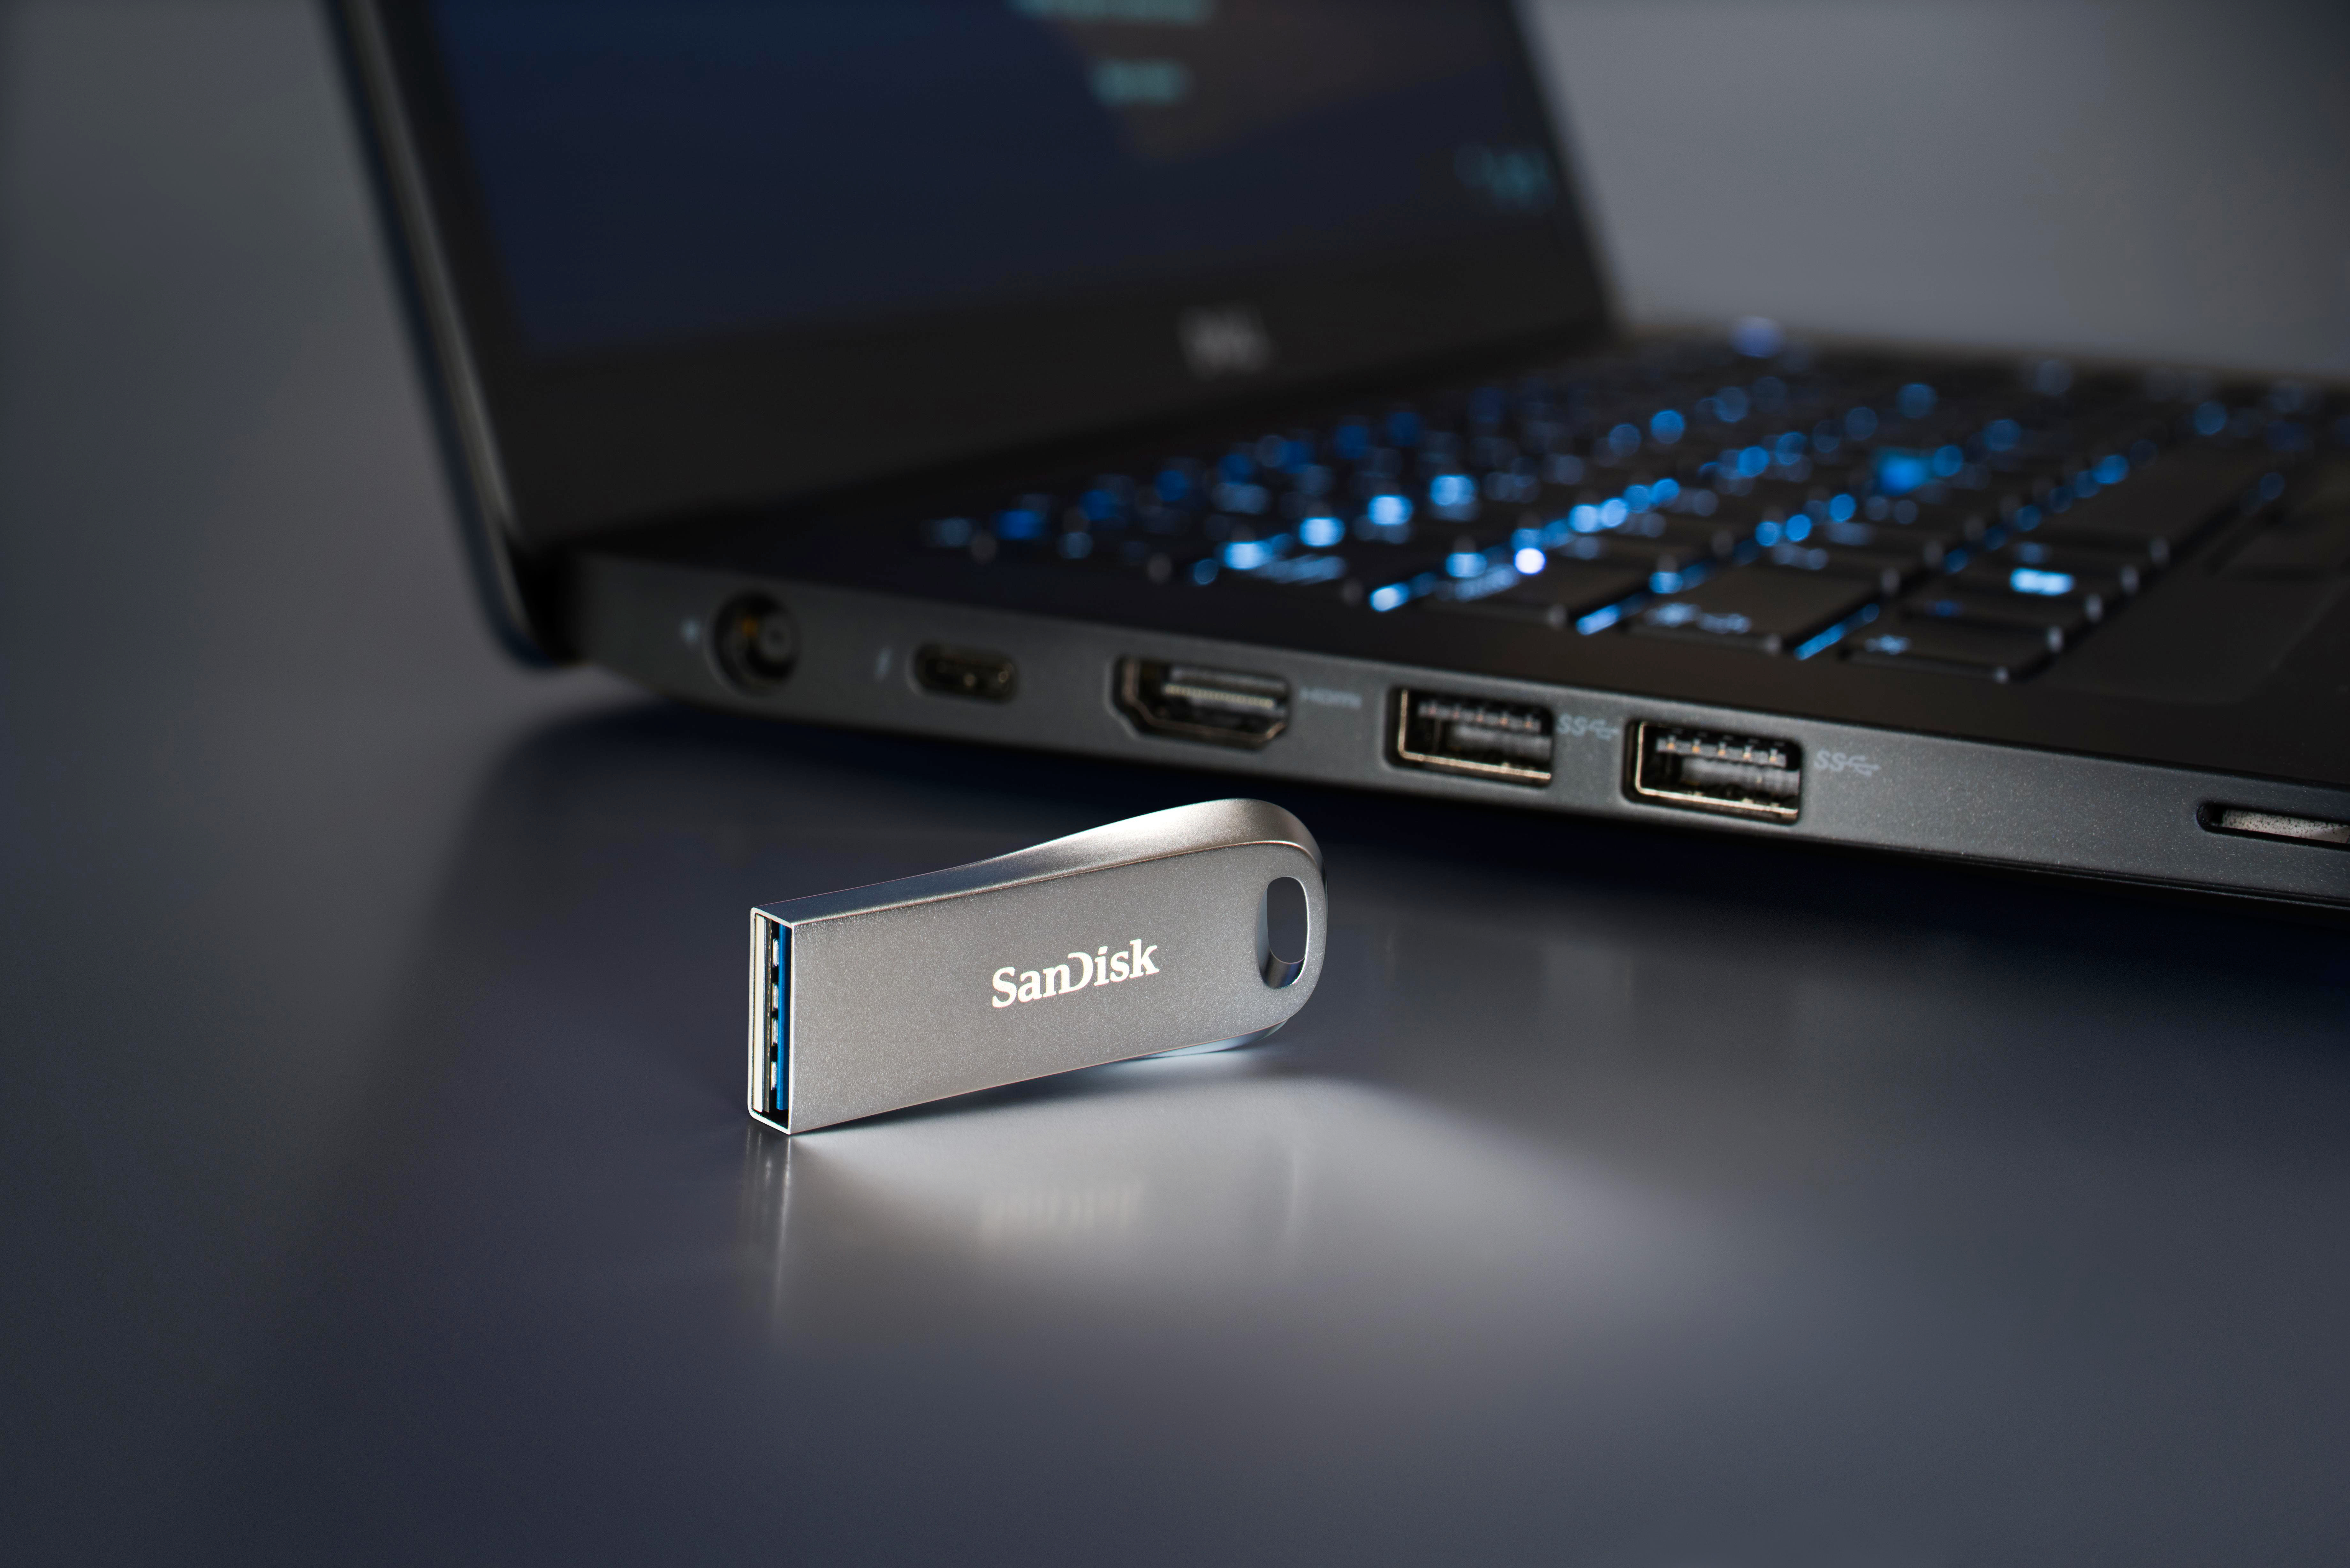 Luxe USB Silber 64 MB/s, Ultra GB, Flash-Laufwerk, 150 SANDISK